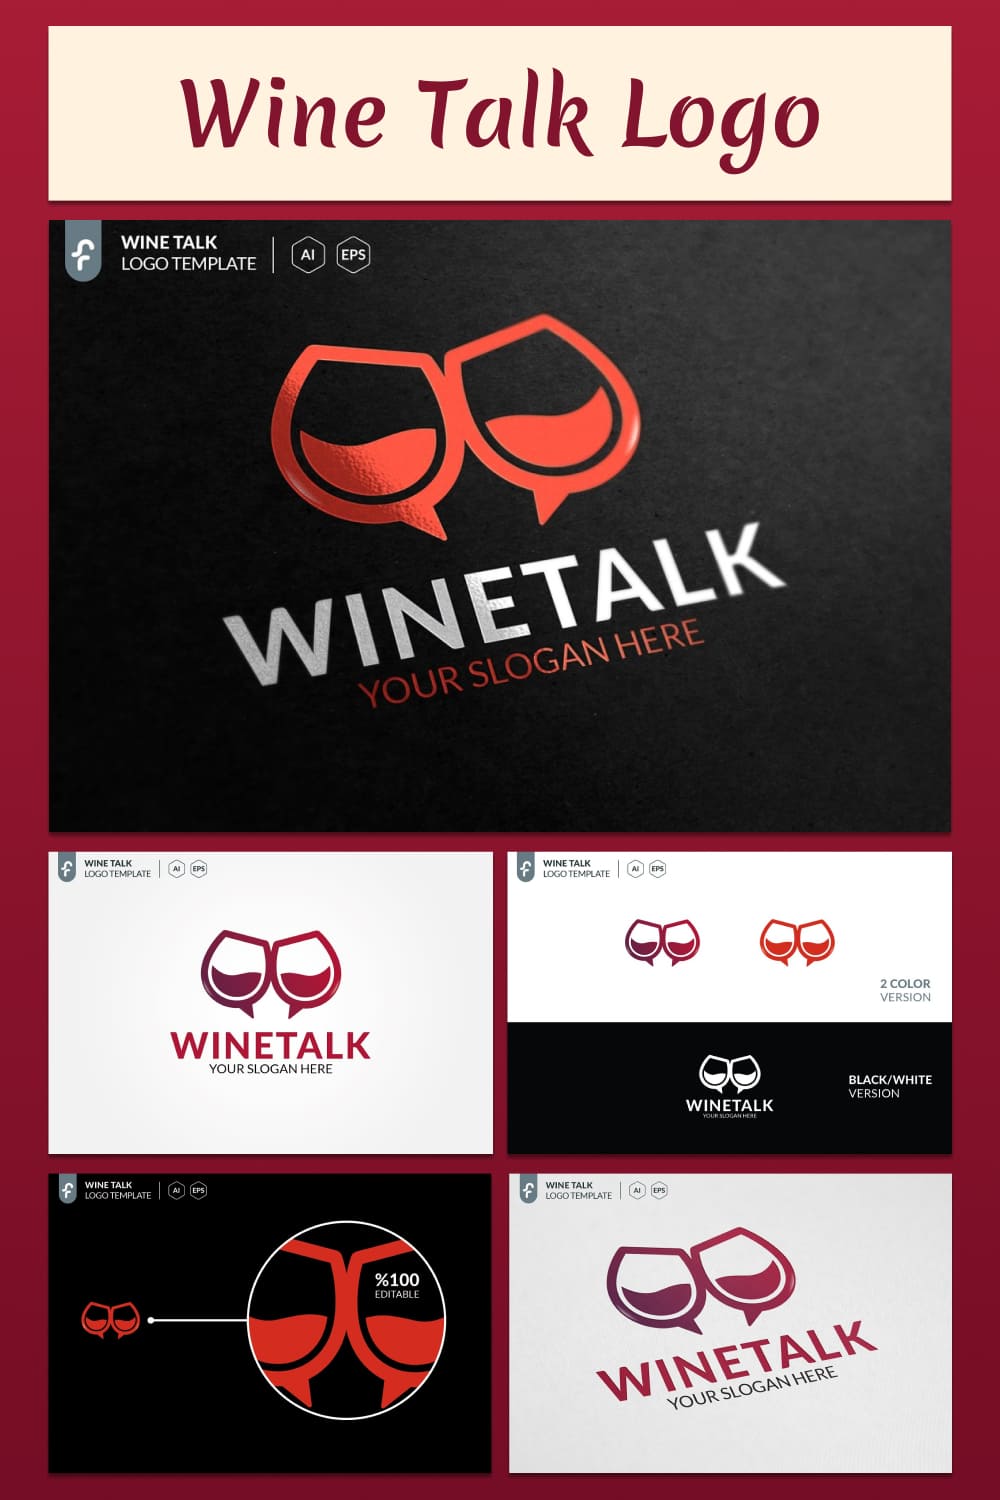 Wine Talk Logo - Pinterest Image Preview.